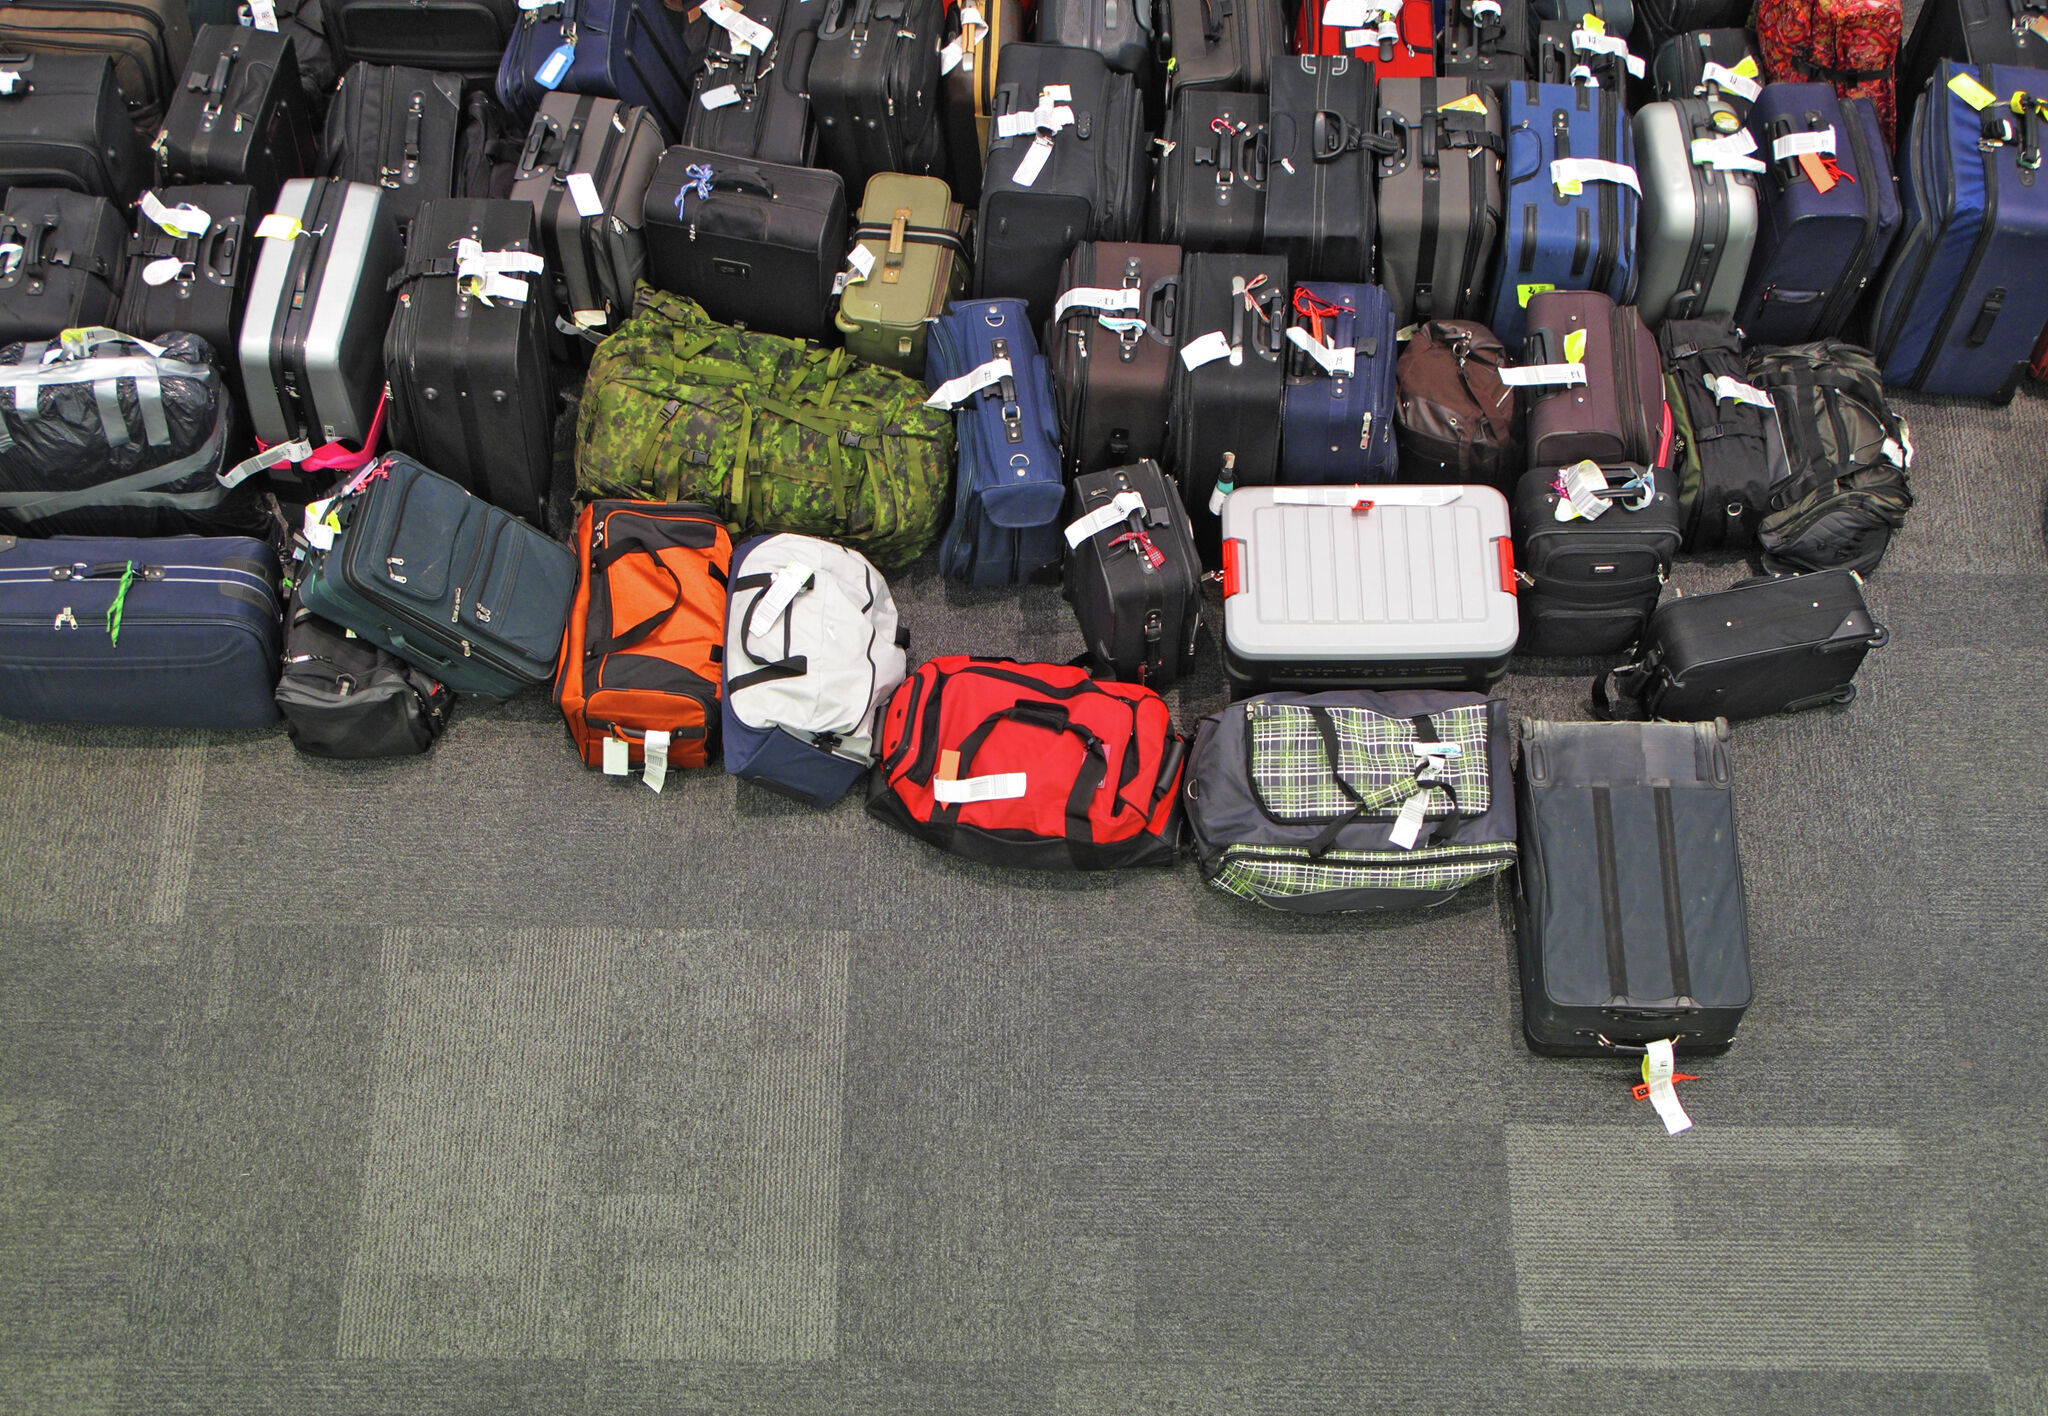 Delta Air Lines fills transatlantic flight with nothing but 1,000 stranded bags